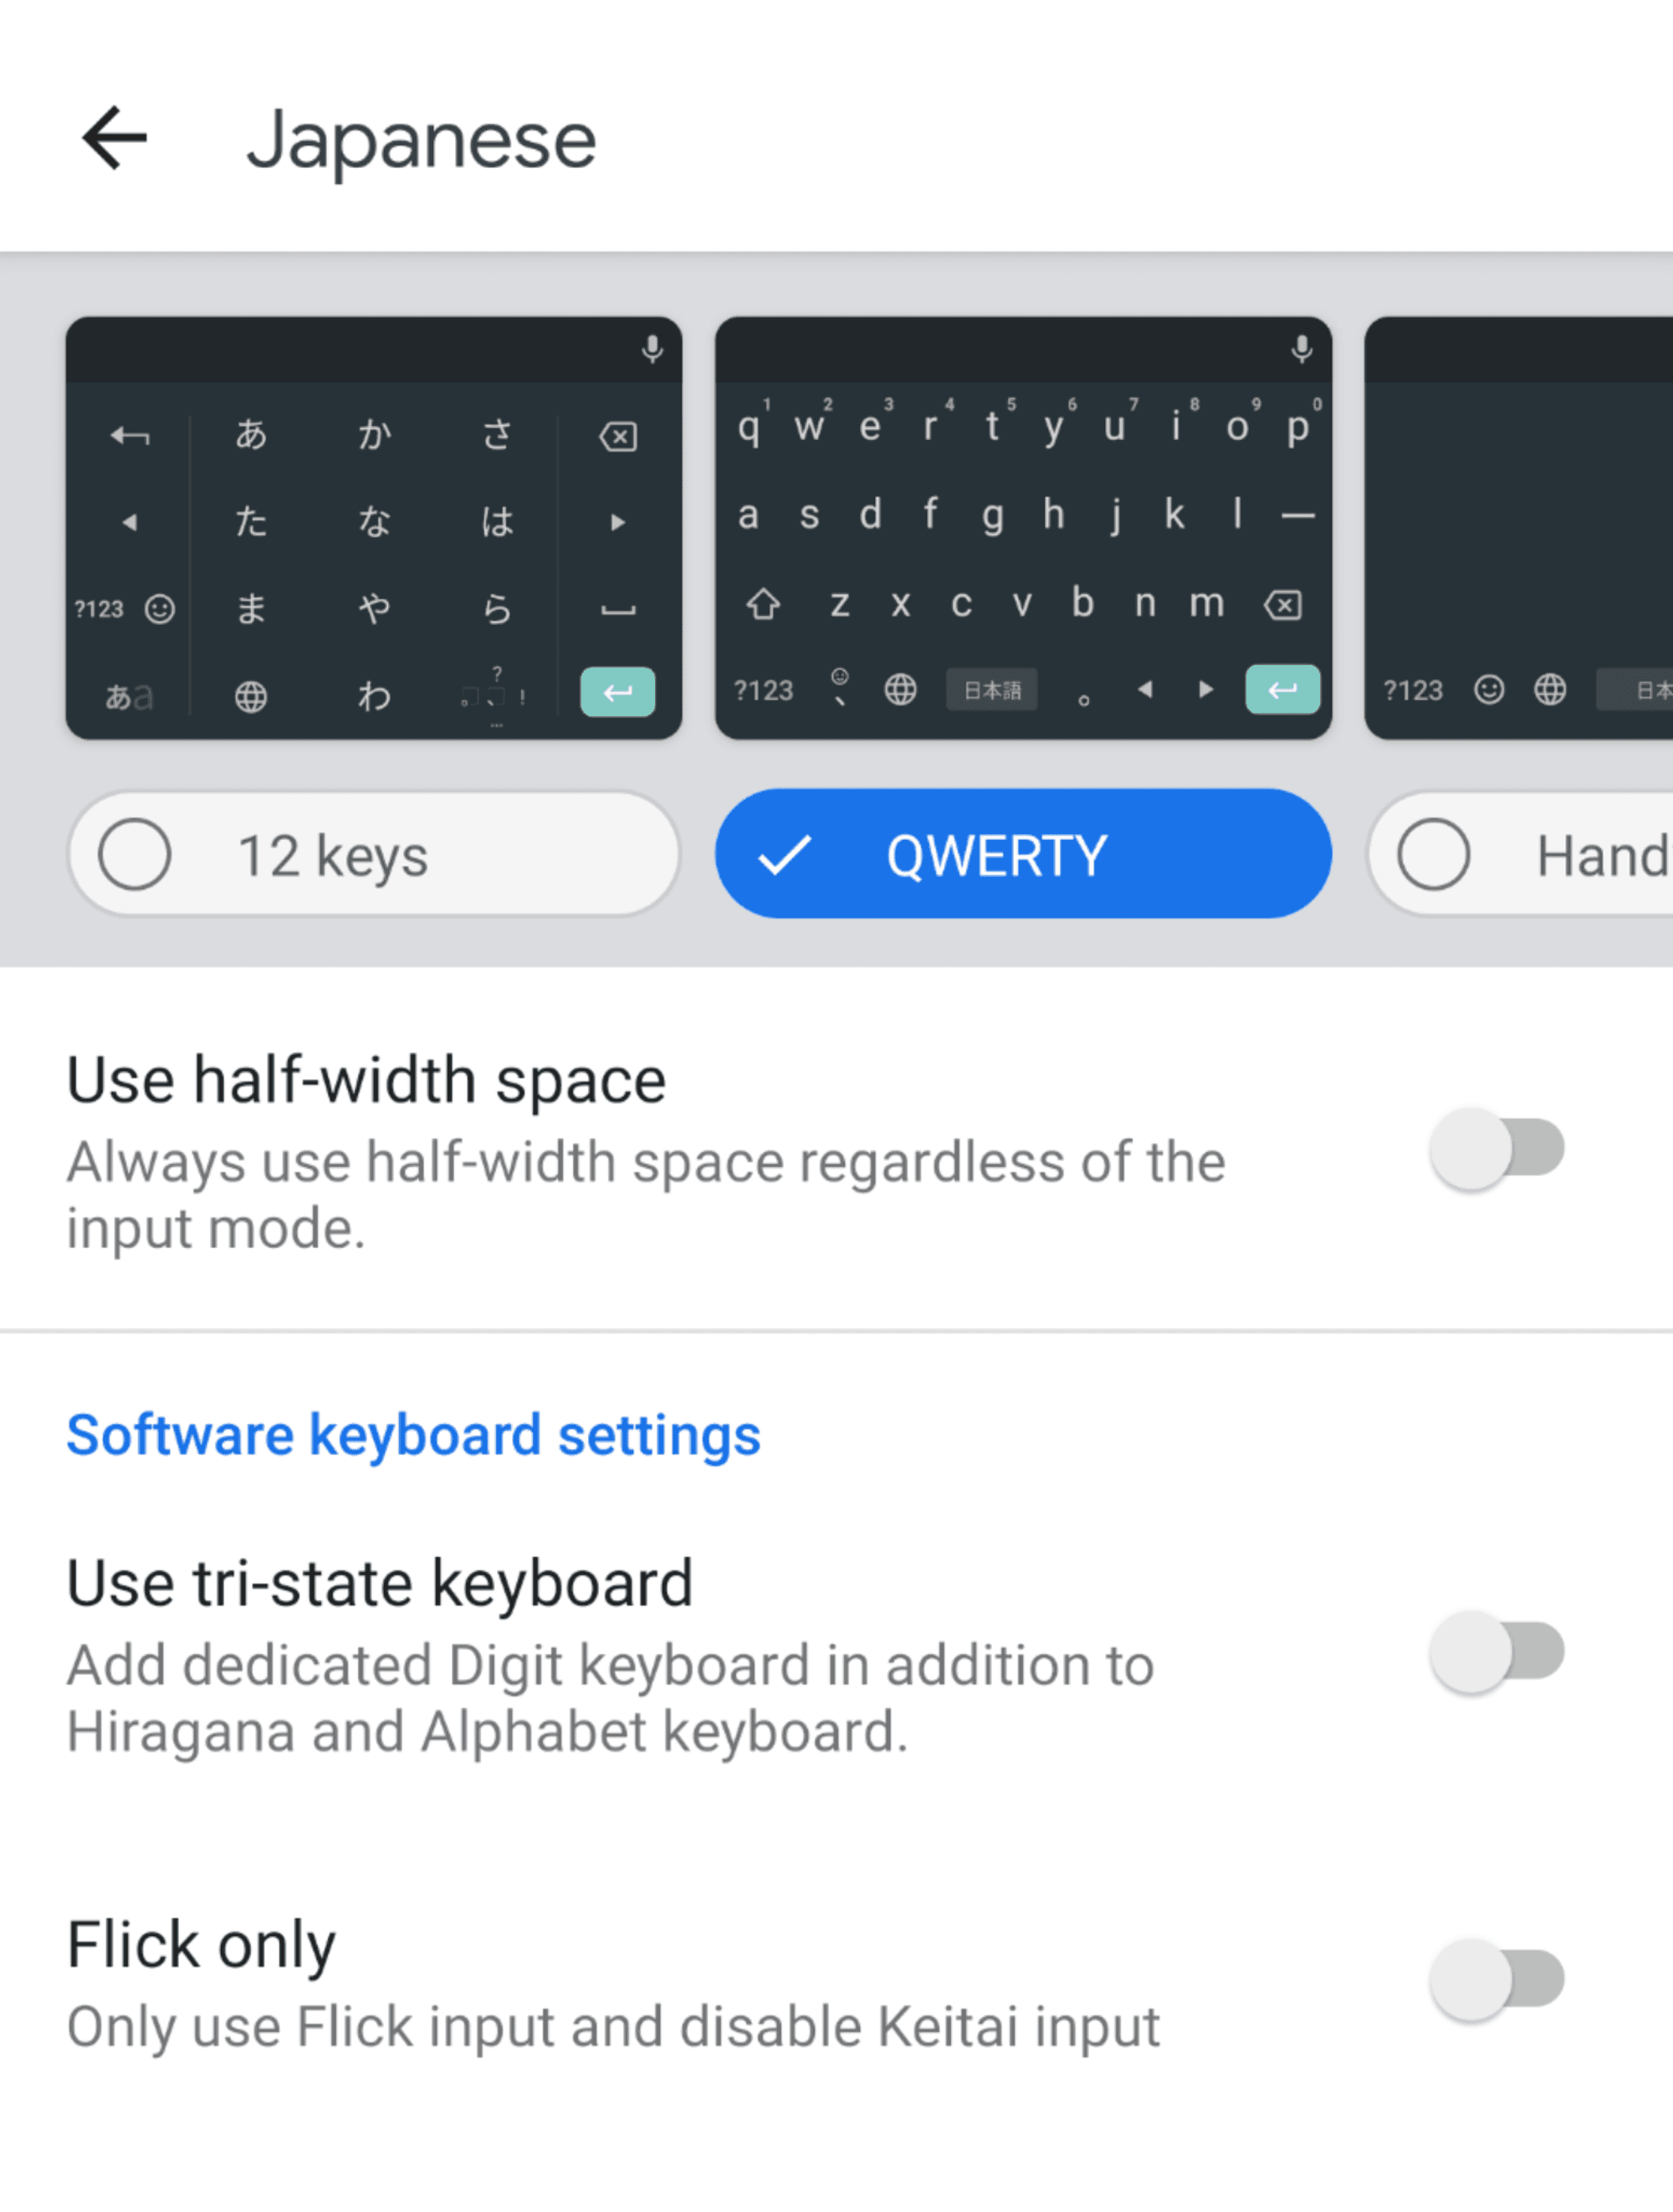 jp_keyboard_settings.png